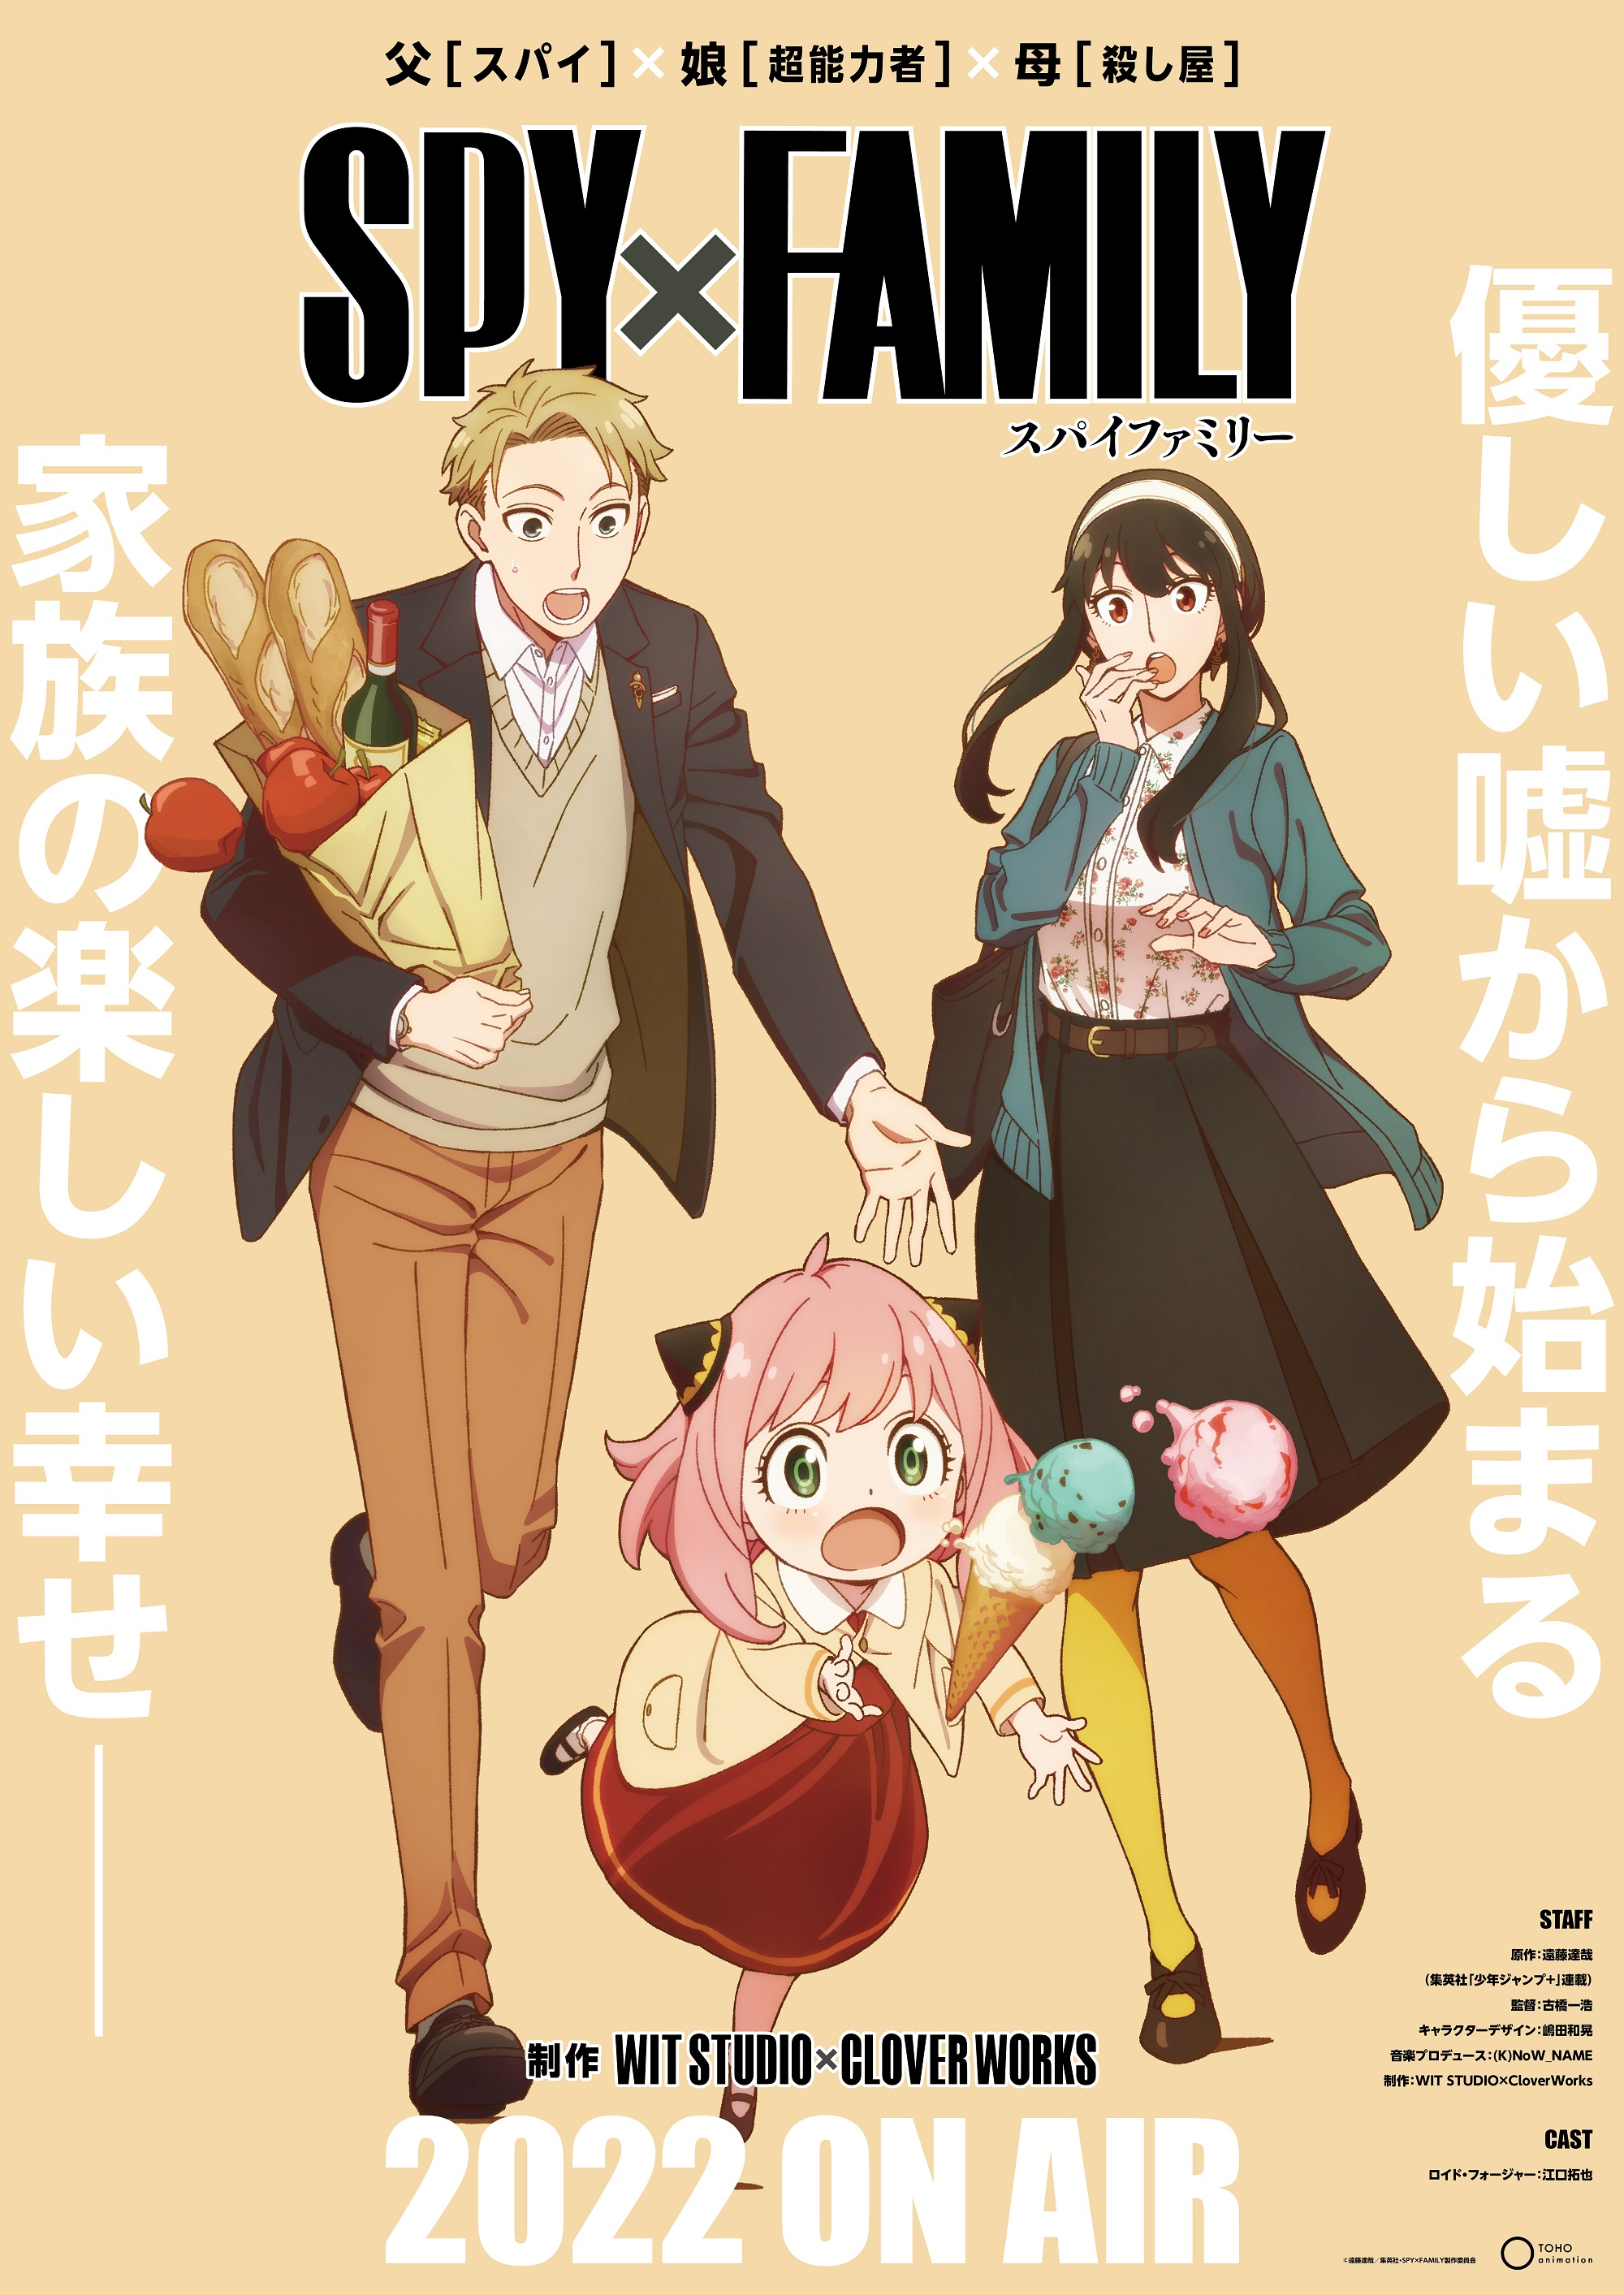 Anime - Spy x Family - Yor Forger by Elisban